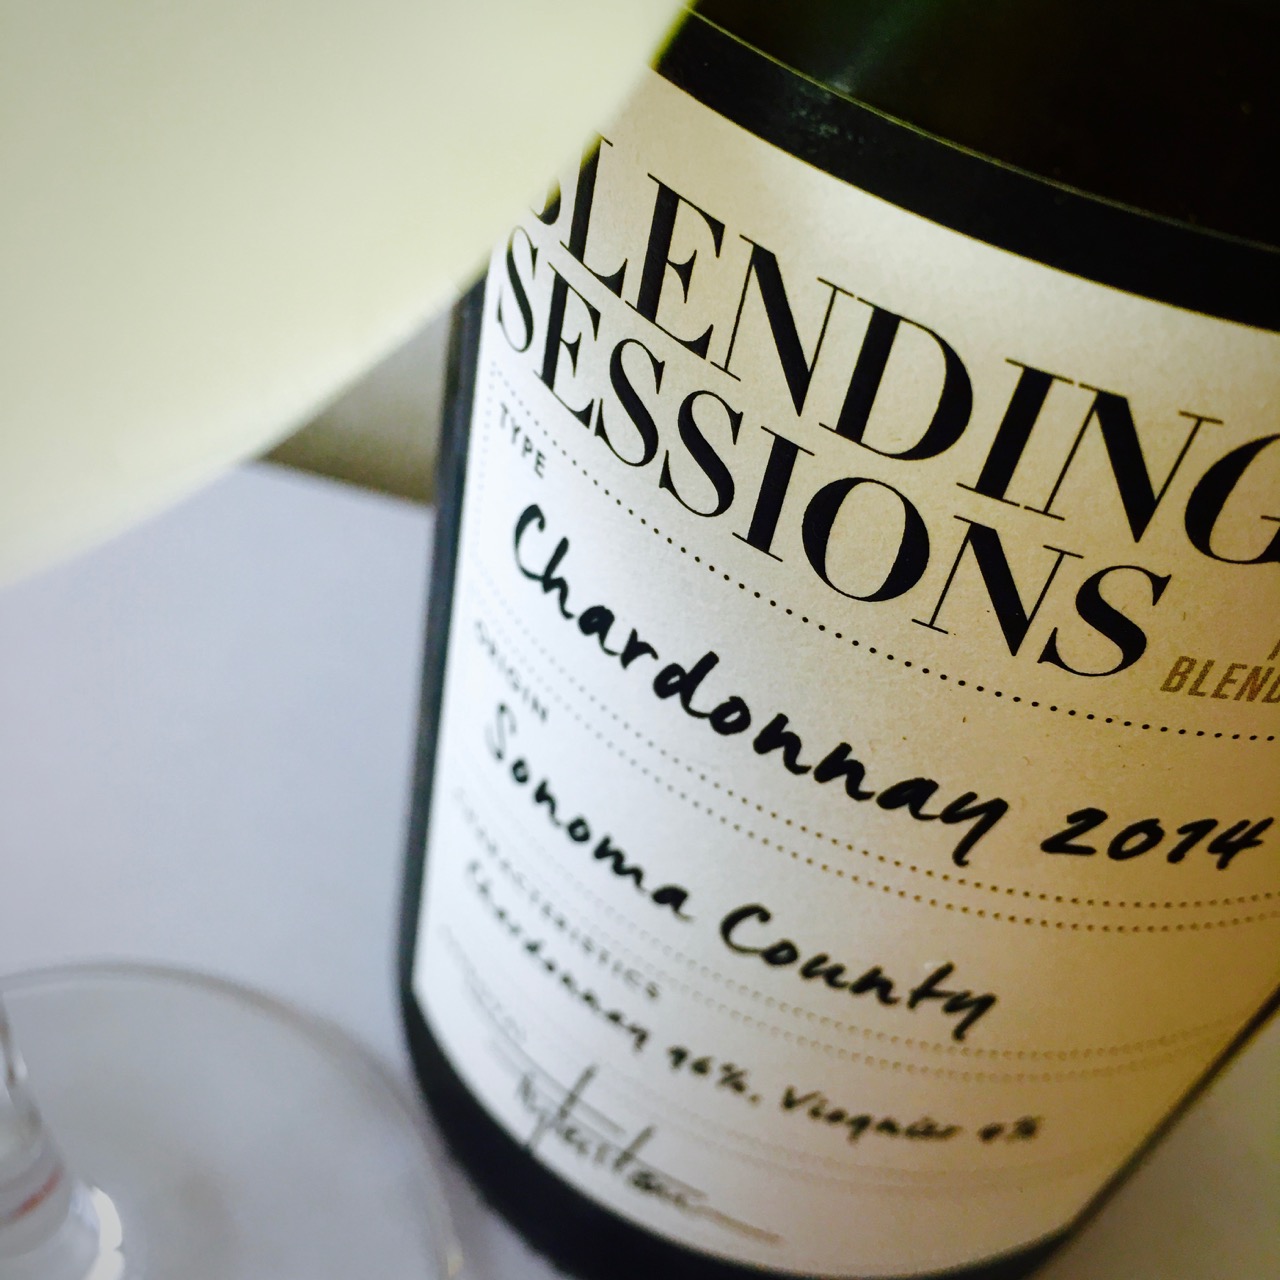 2014 Blending Sessions Chardonnay Sonoma County